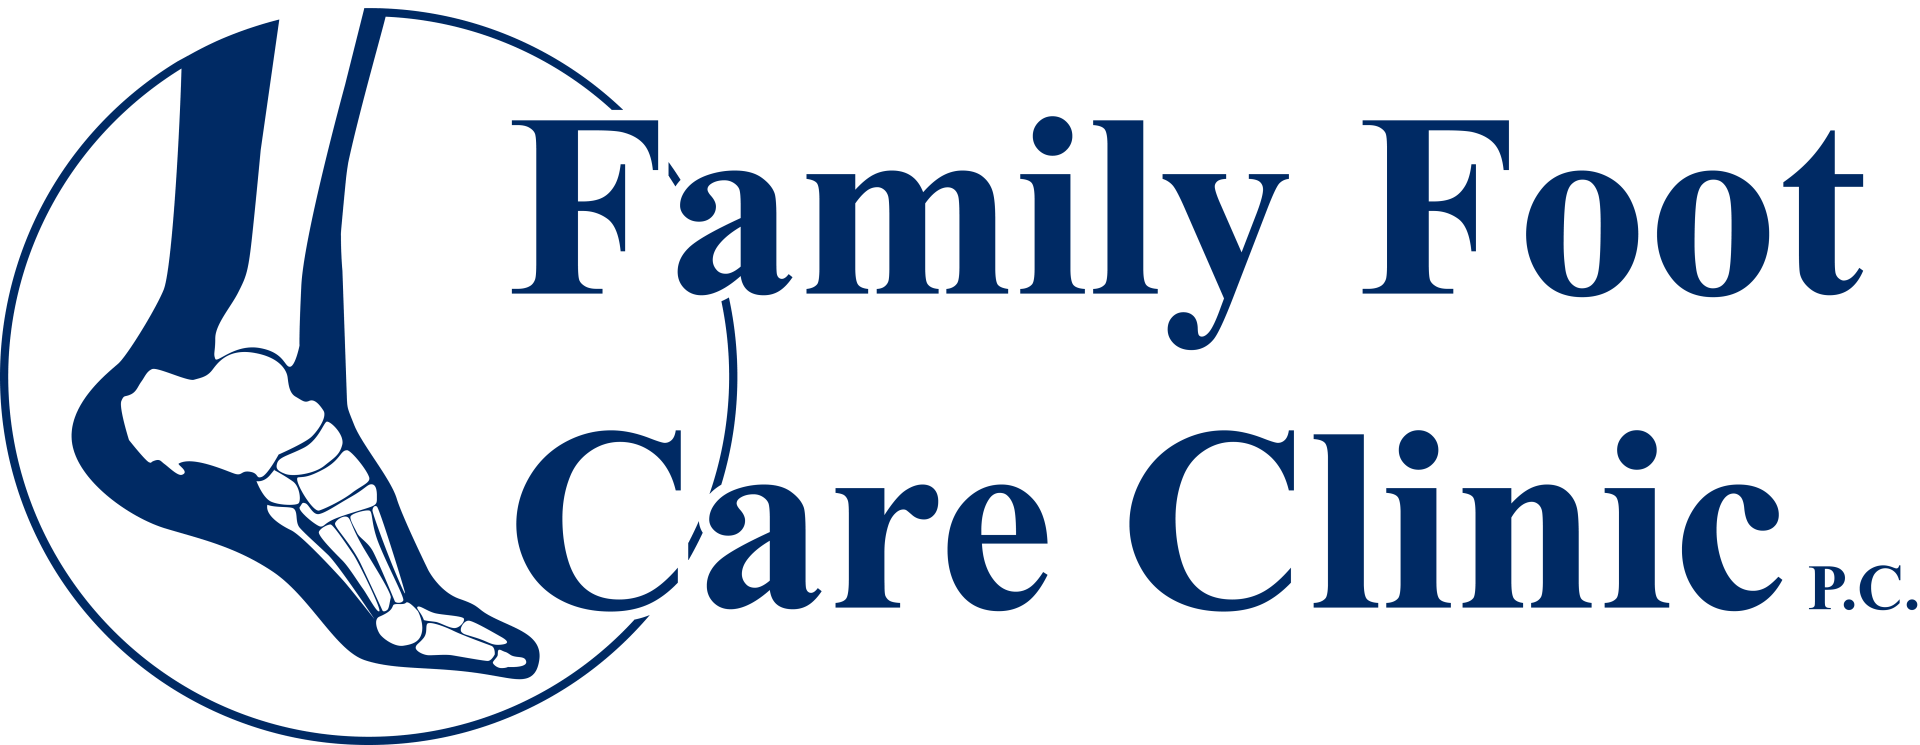 Family Foot Care Clinic, PC logo